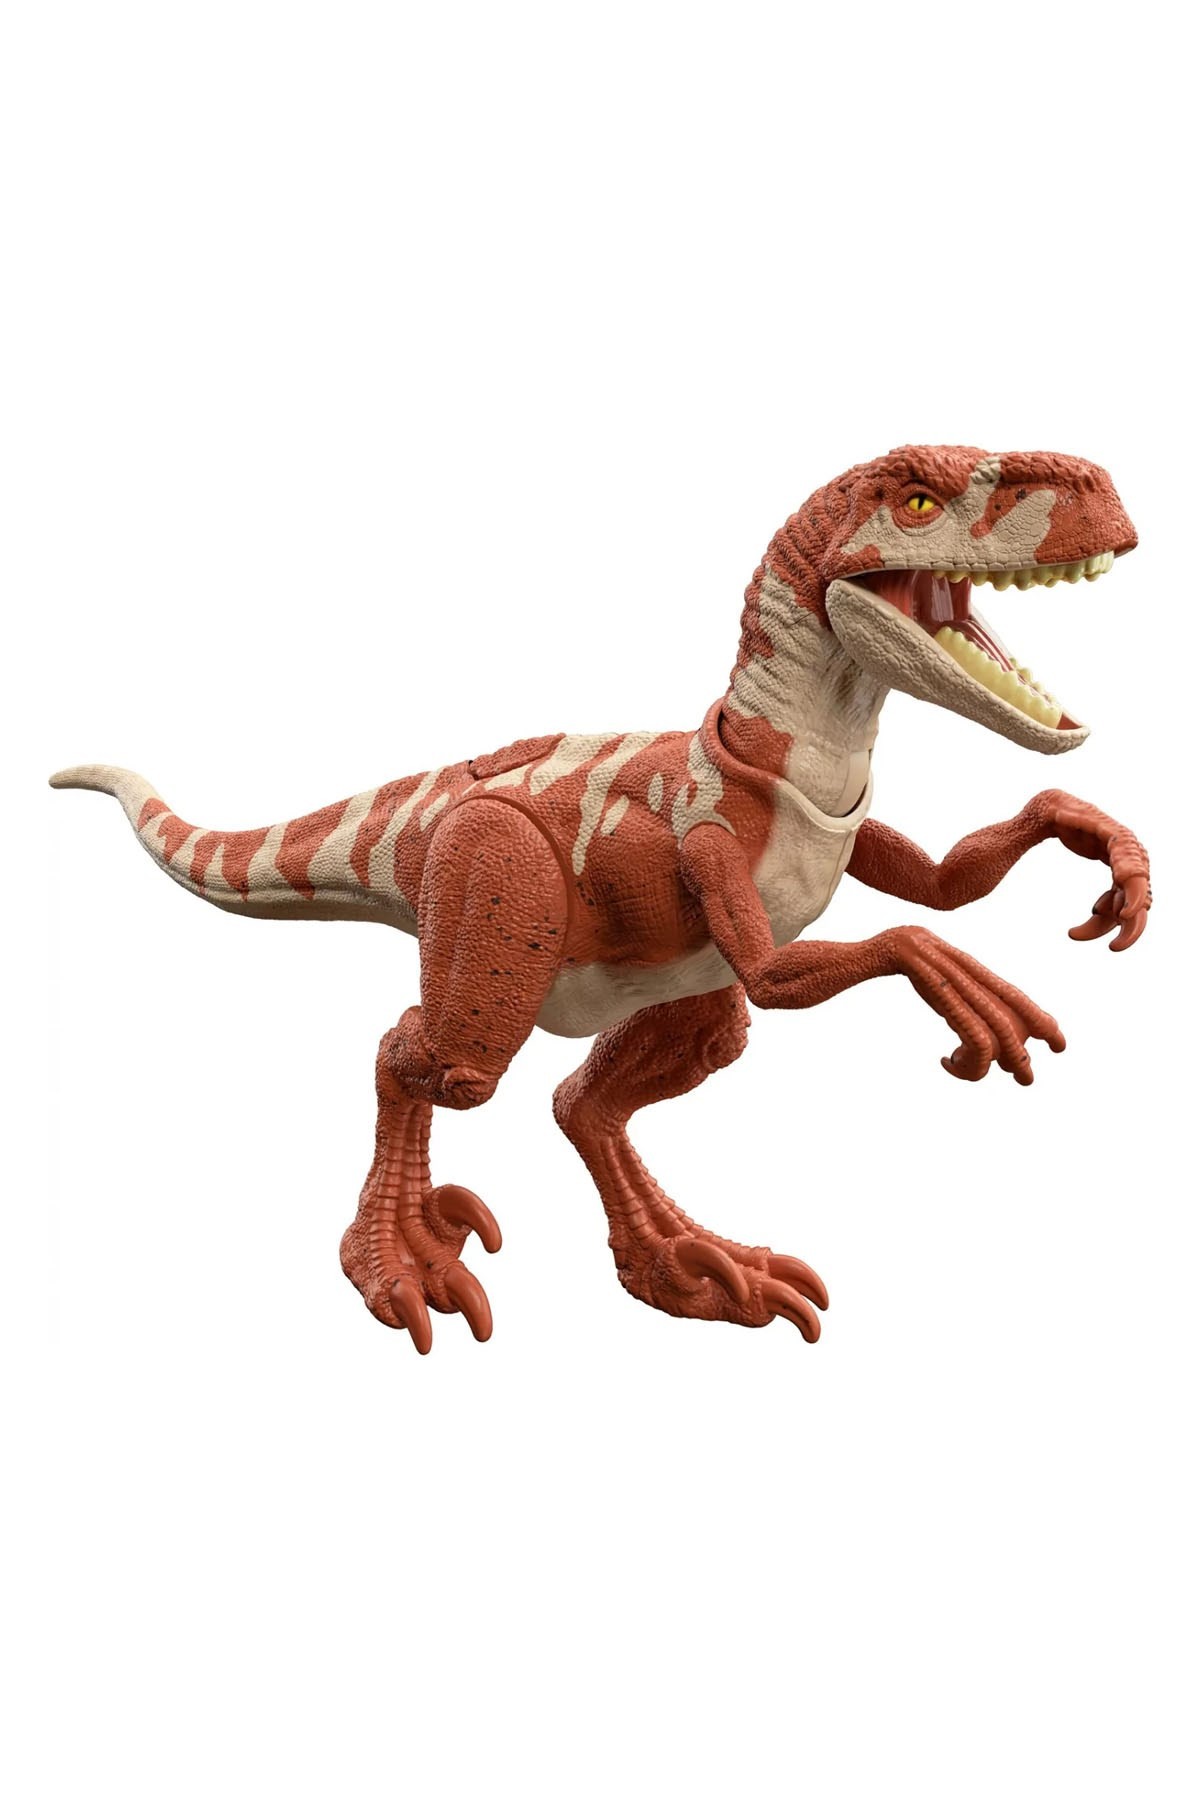 Jurassic World Tehlikeli Dinozor Figürü GWC97